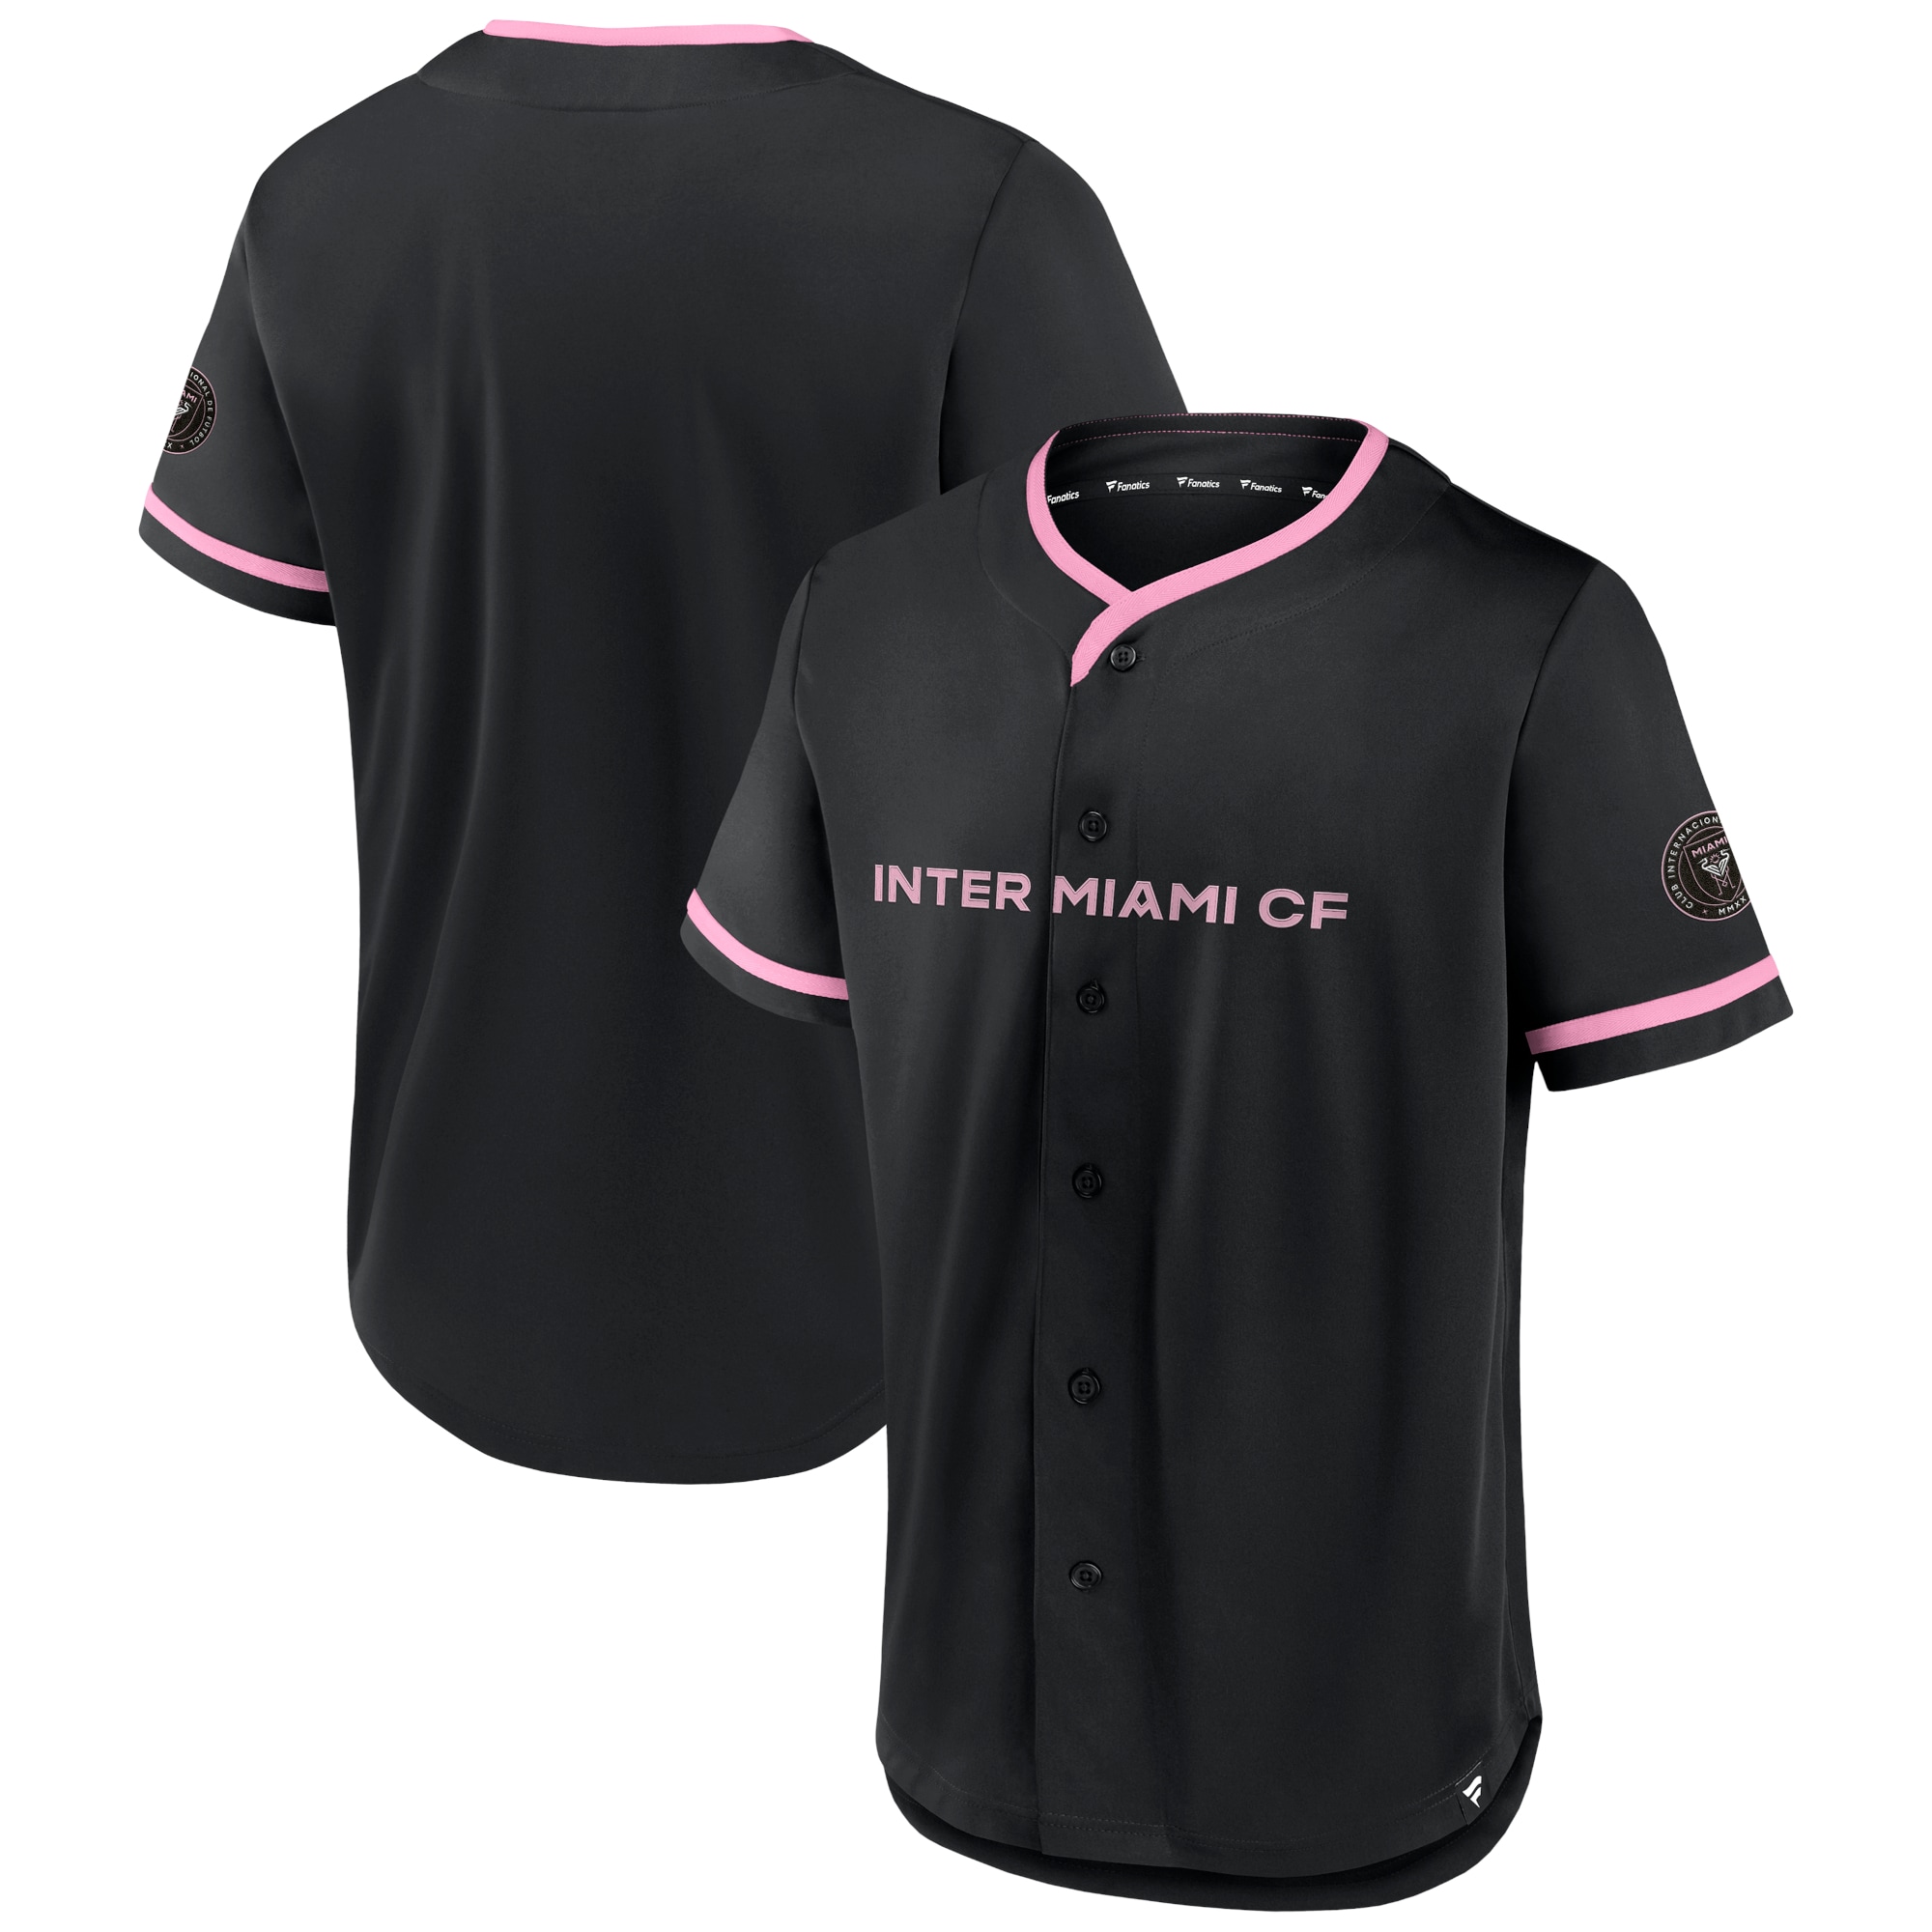 Men's Inter Miami CF Jerseys Black/Pink Ultimate Player Baseball Style